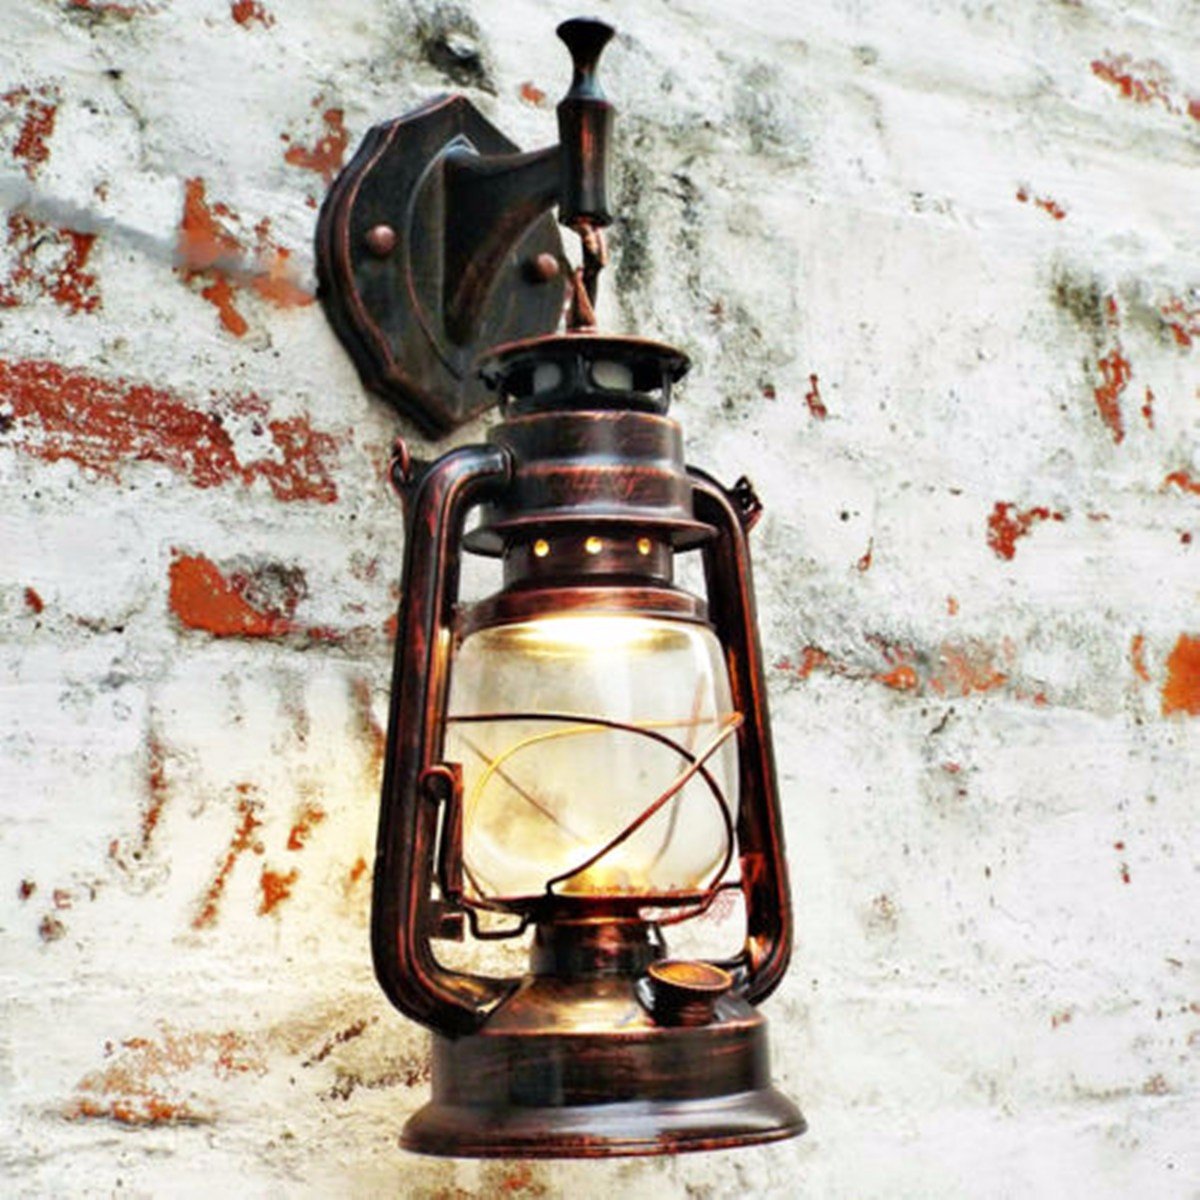 

Vintage Retro Thrift Wall Lamp Lantern Mount Sconce European Lights Home Deco Bedside Lamp, Gold red black